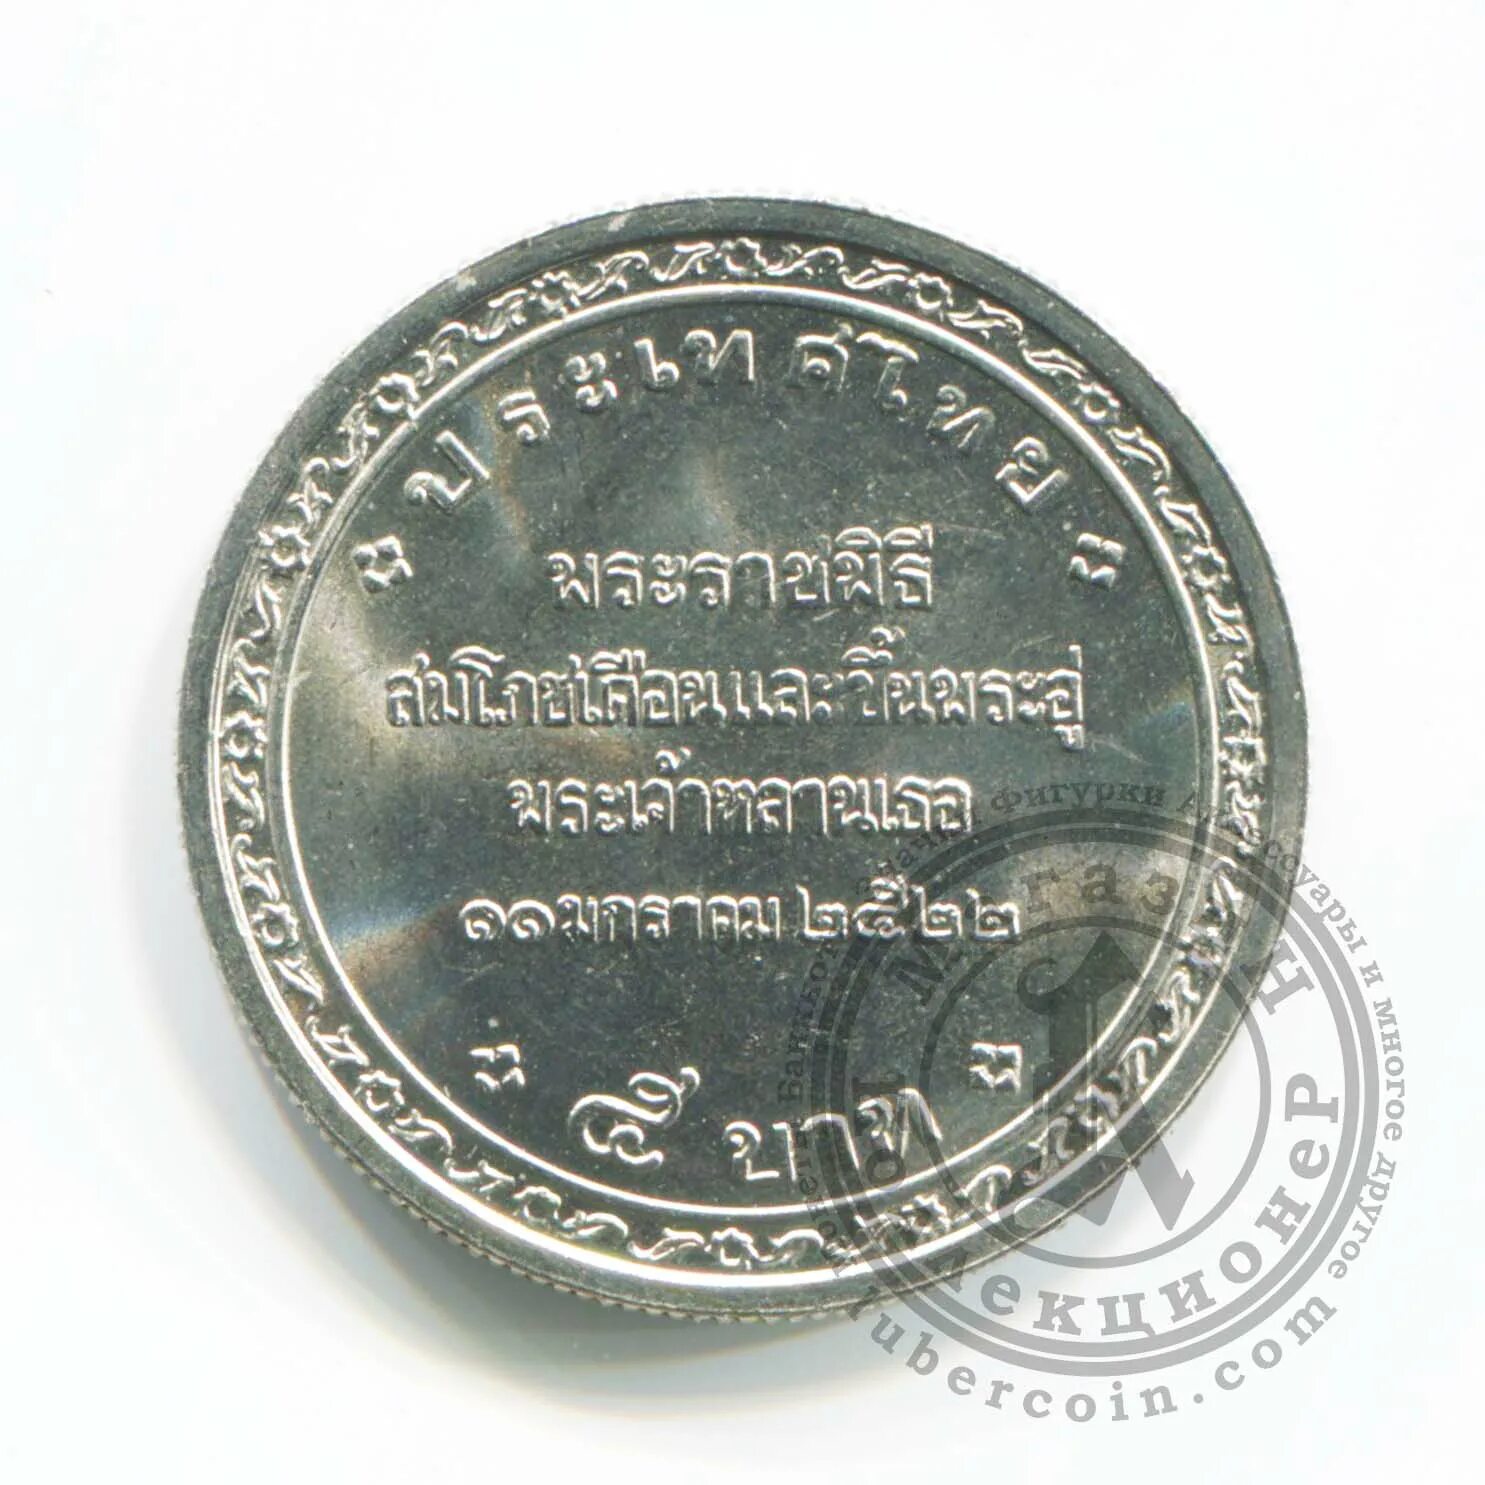 Монеты Таиланда 5 бат 1979 Колыбельная церемония. Таиланд, 5 бат 1979 регулярная. 5 Бат - Таиланд - 2522 (1979) - Королевская Колыбельная церемония.